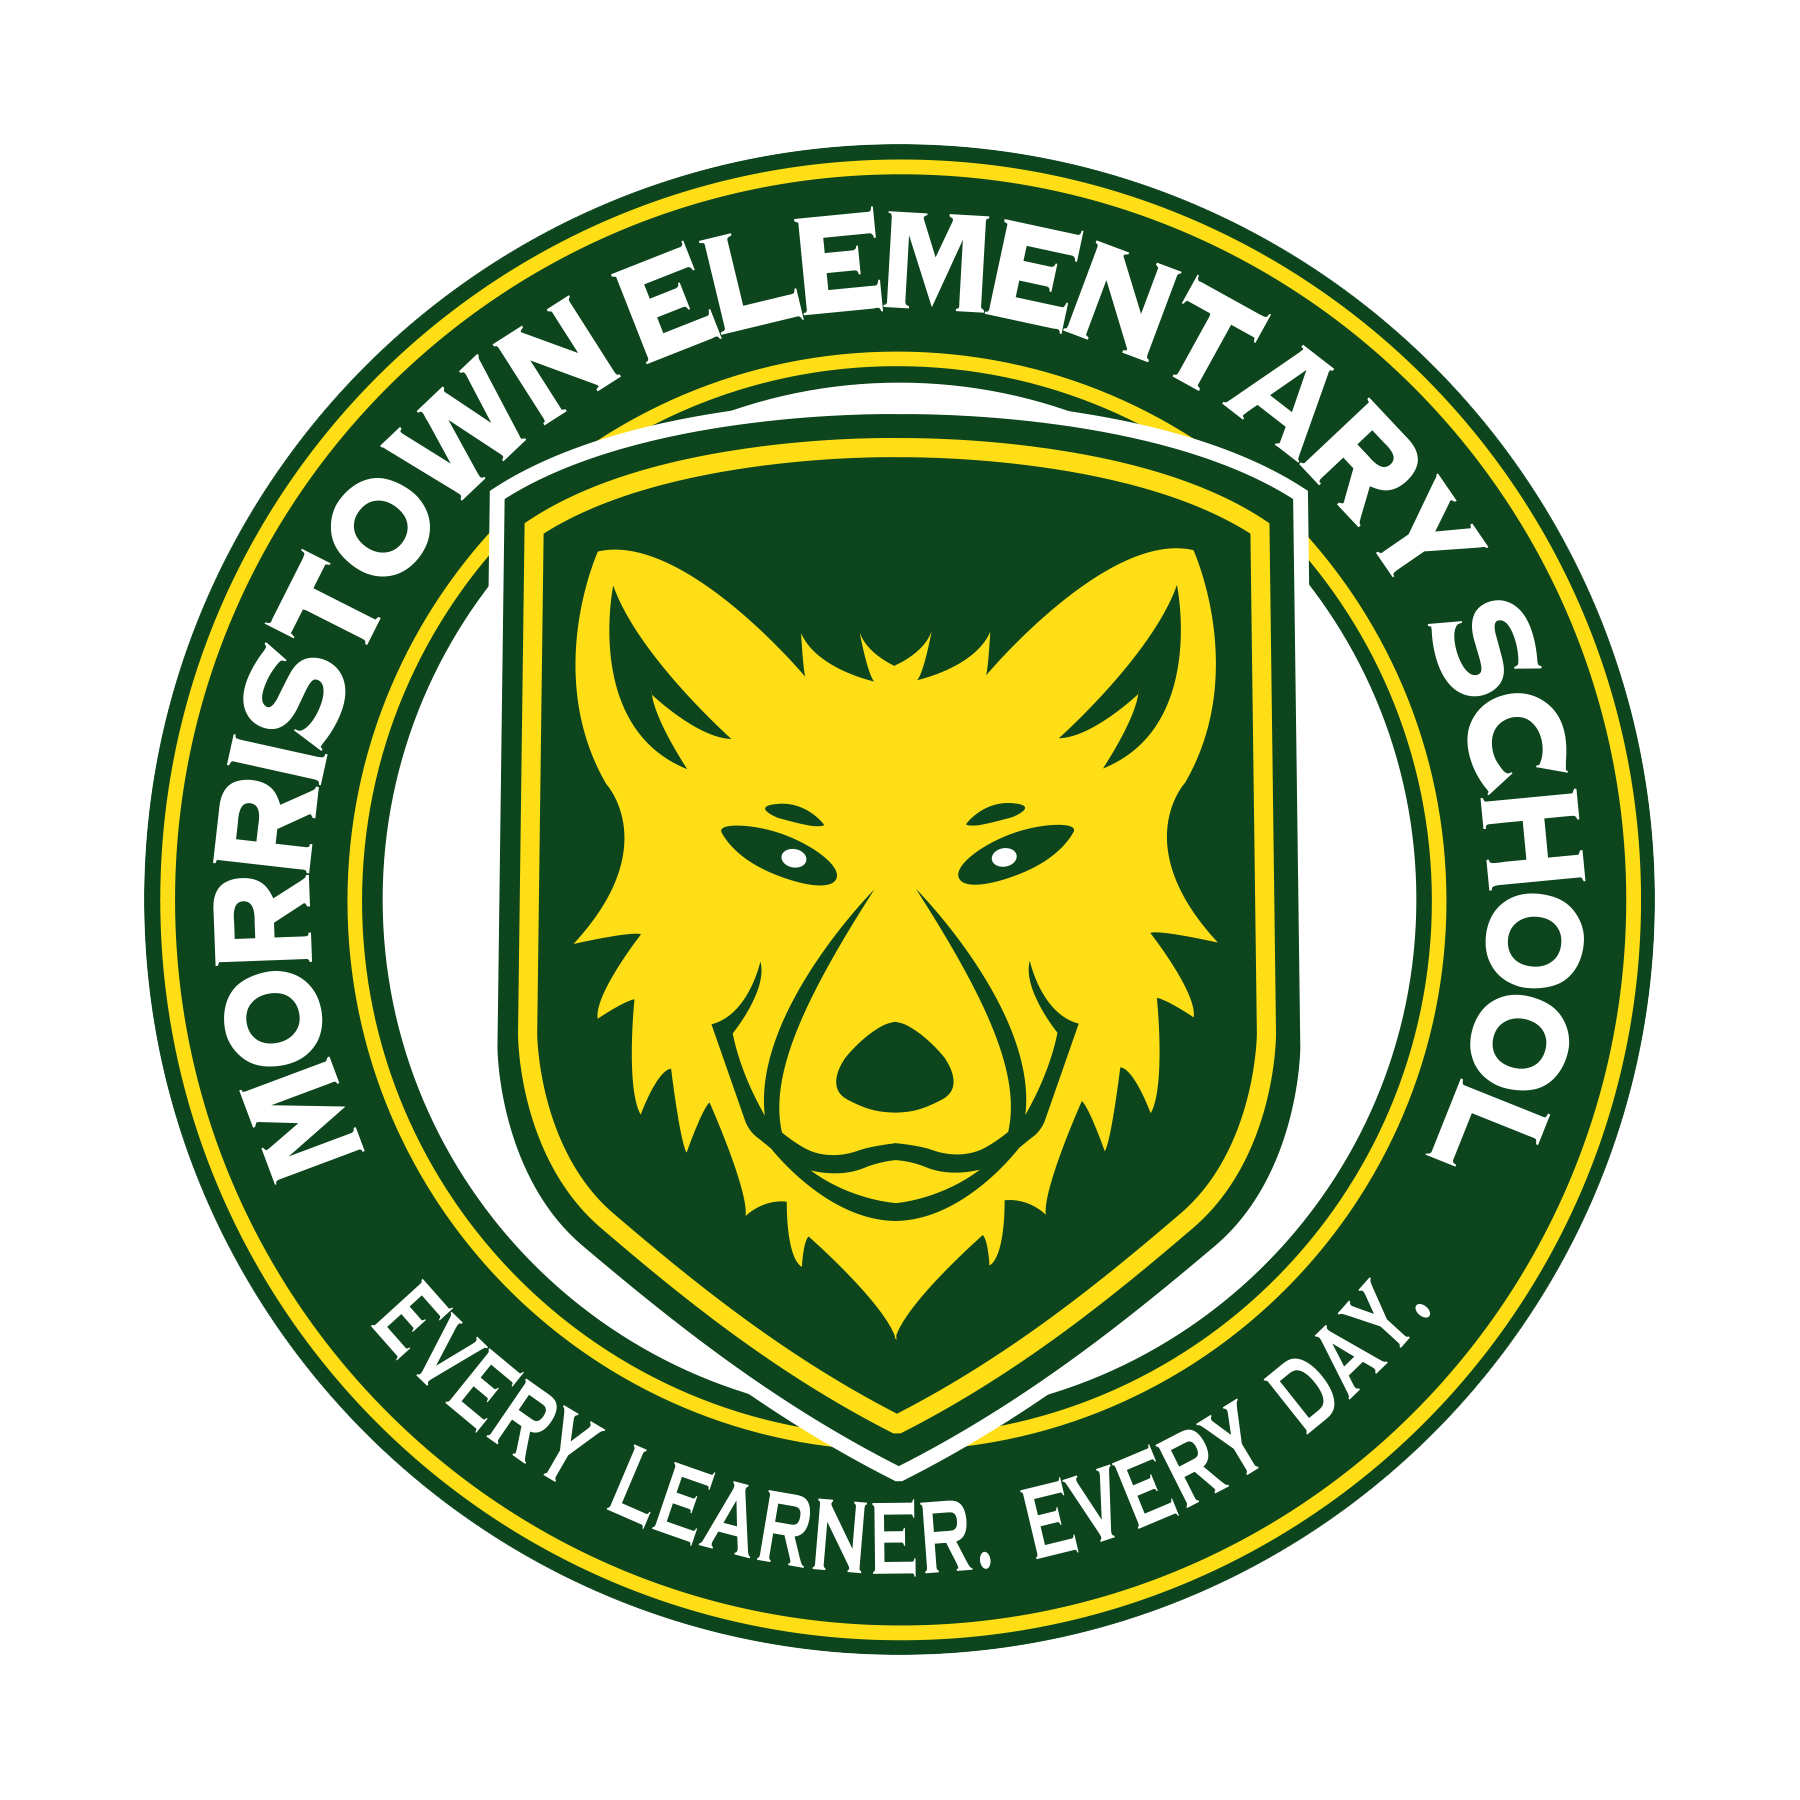 Morristown Elementary School Logo.png